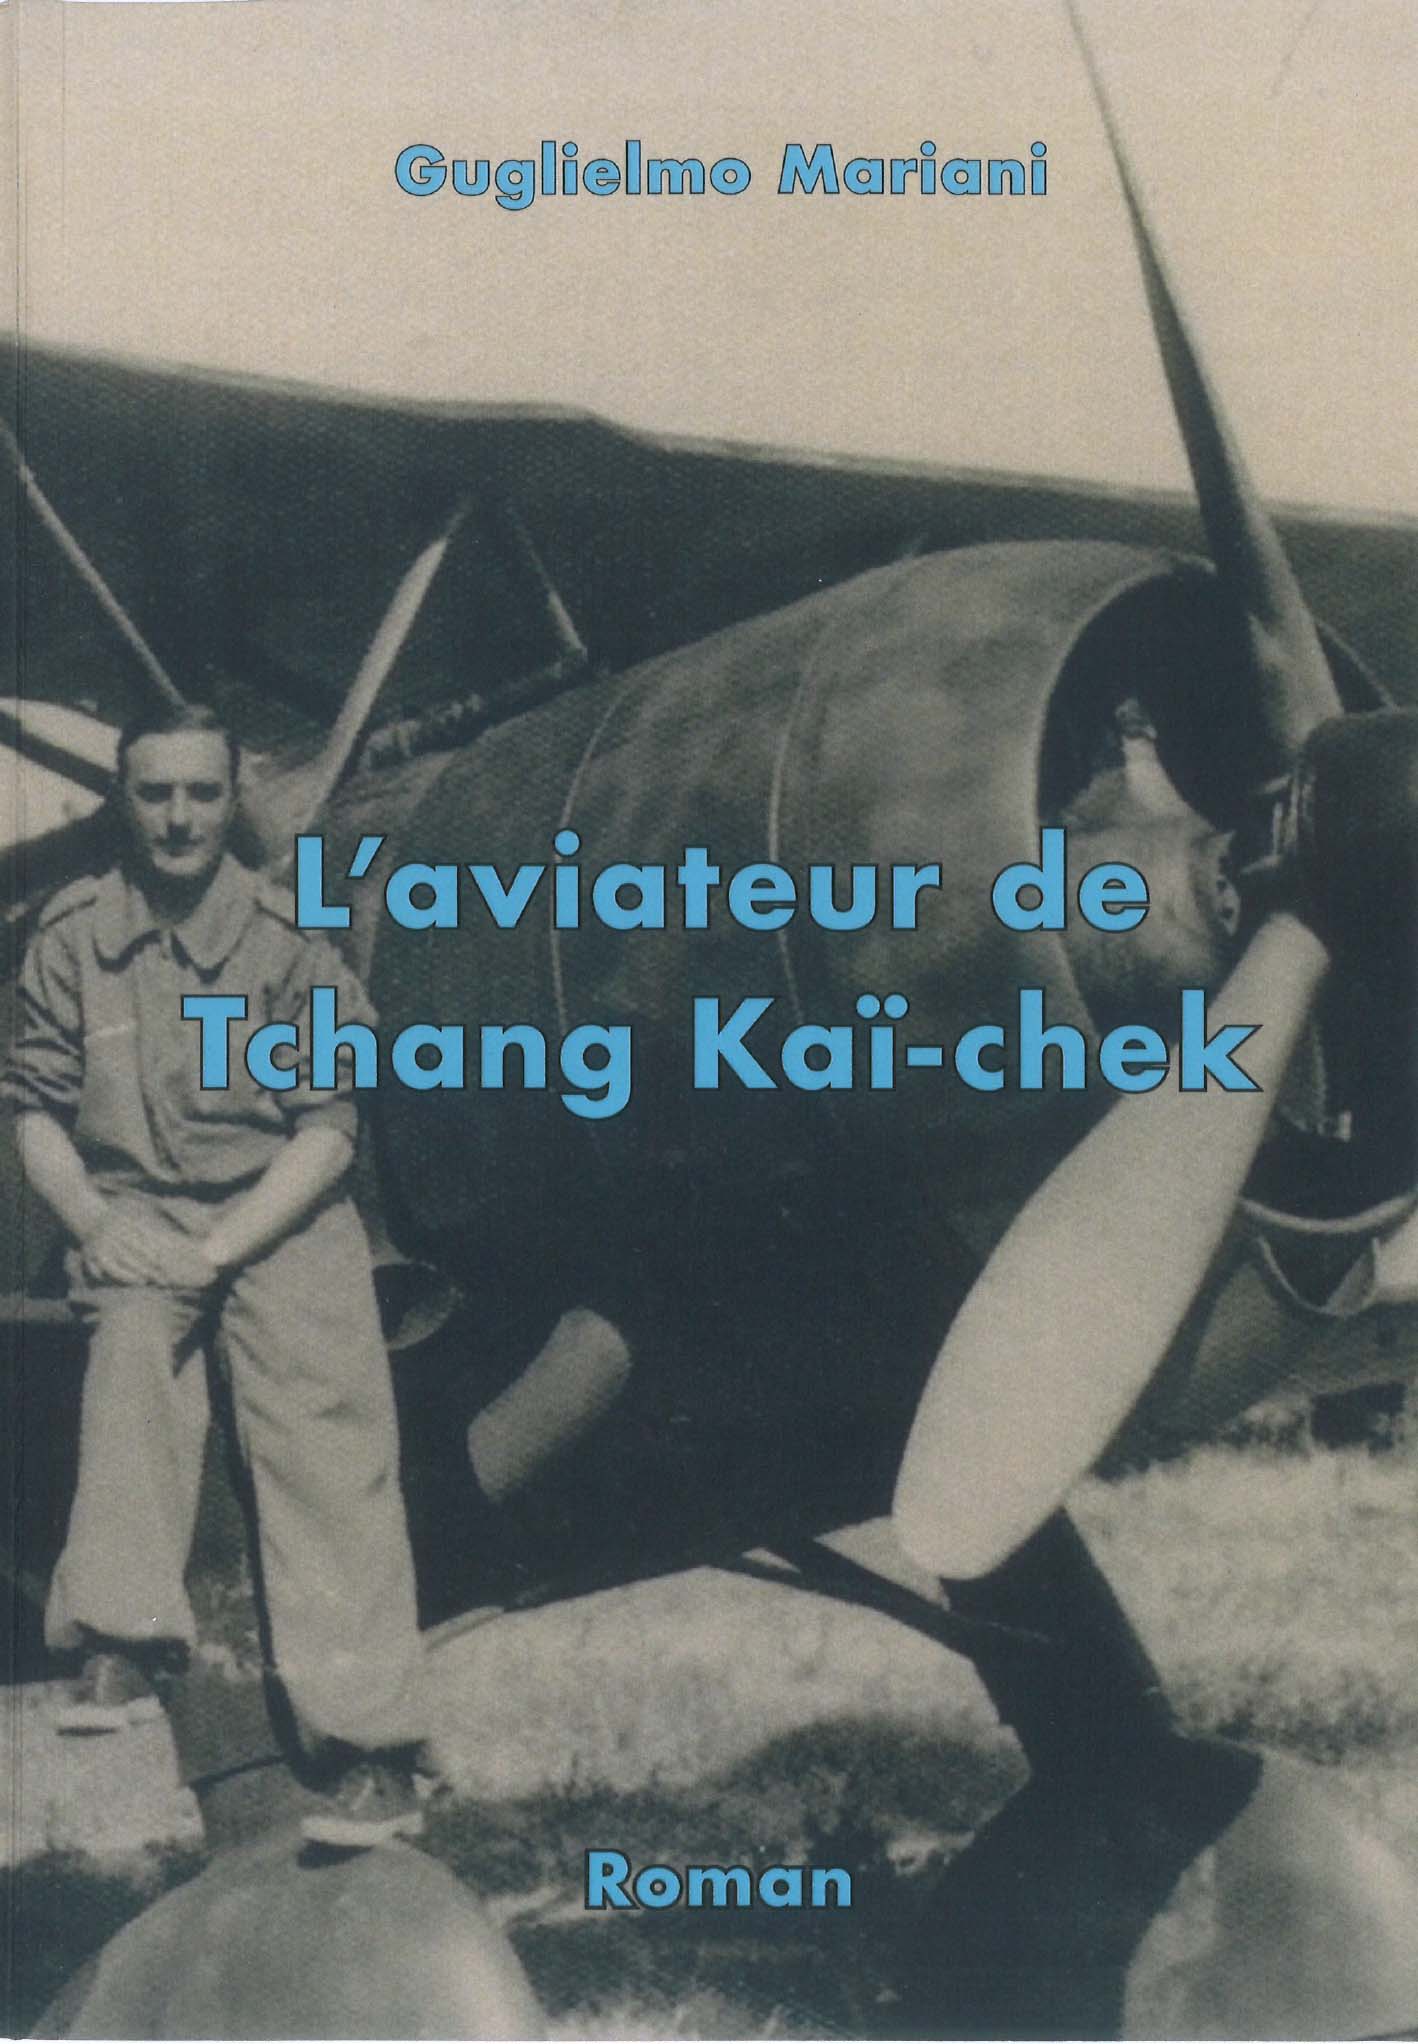 L'aviateur de Tchang Kai-chek di Guglielmo Mariani Opere letterarie